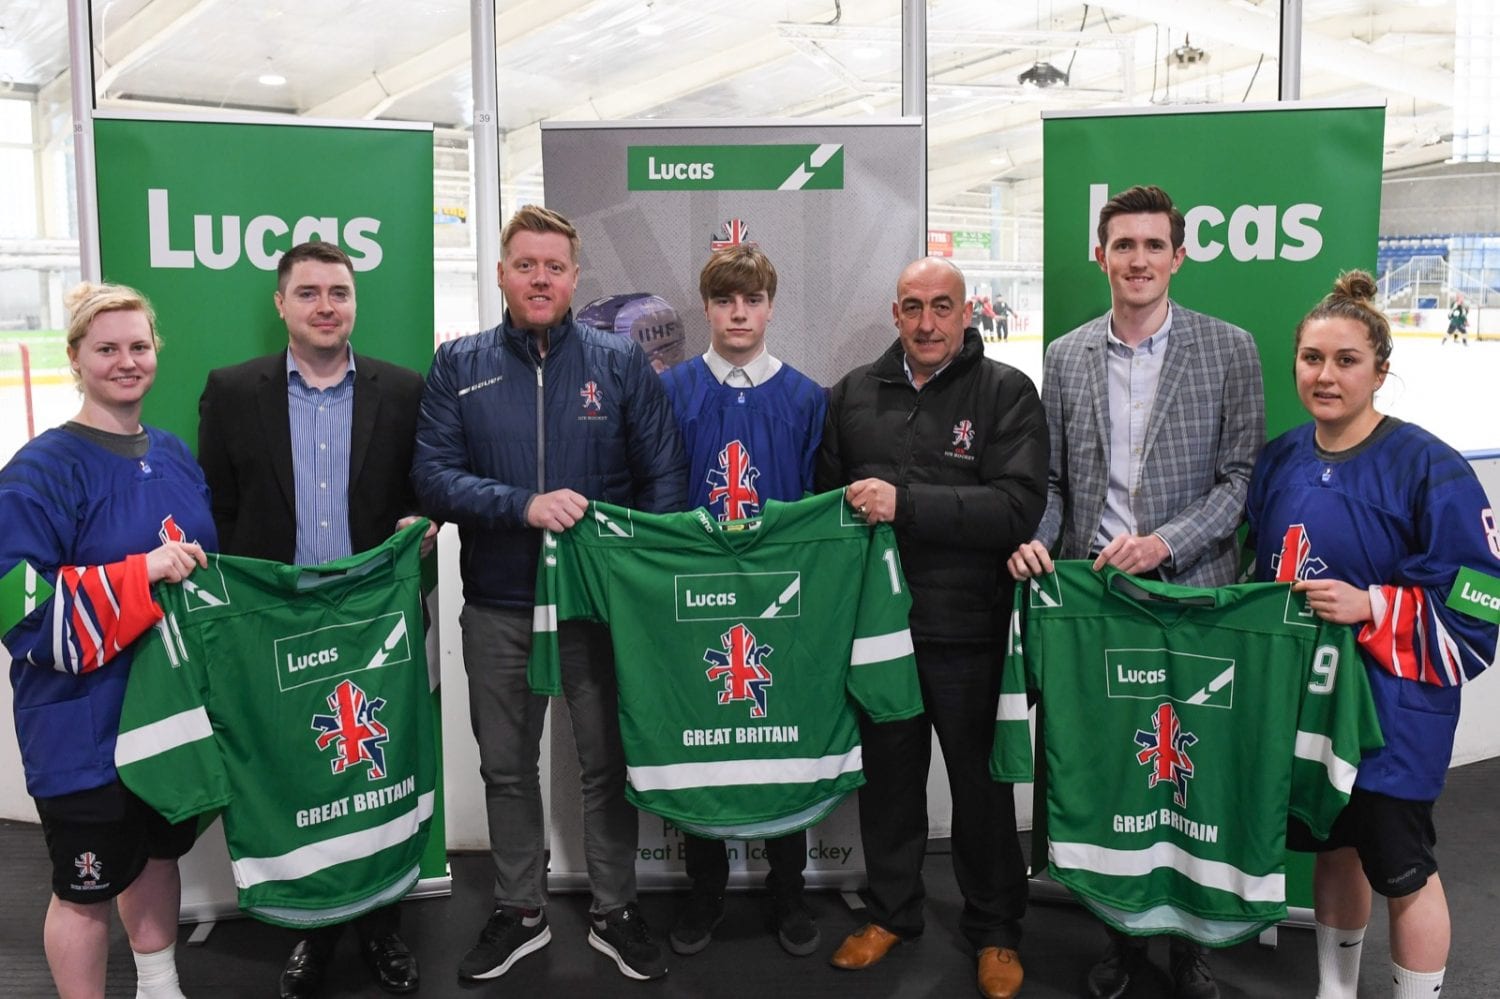 Lucas GB Announcement, British Ice Hockey